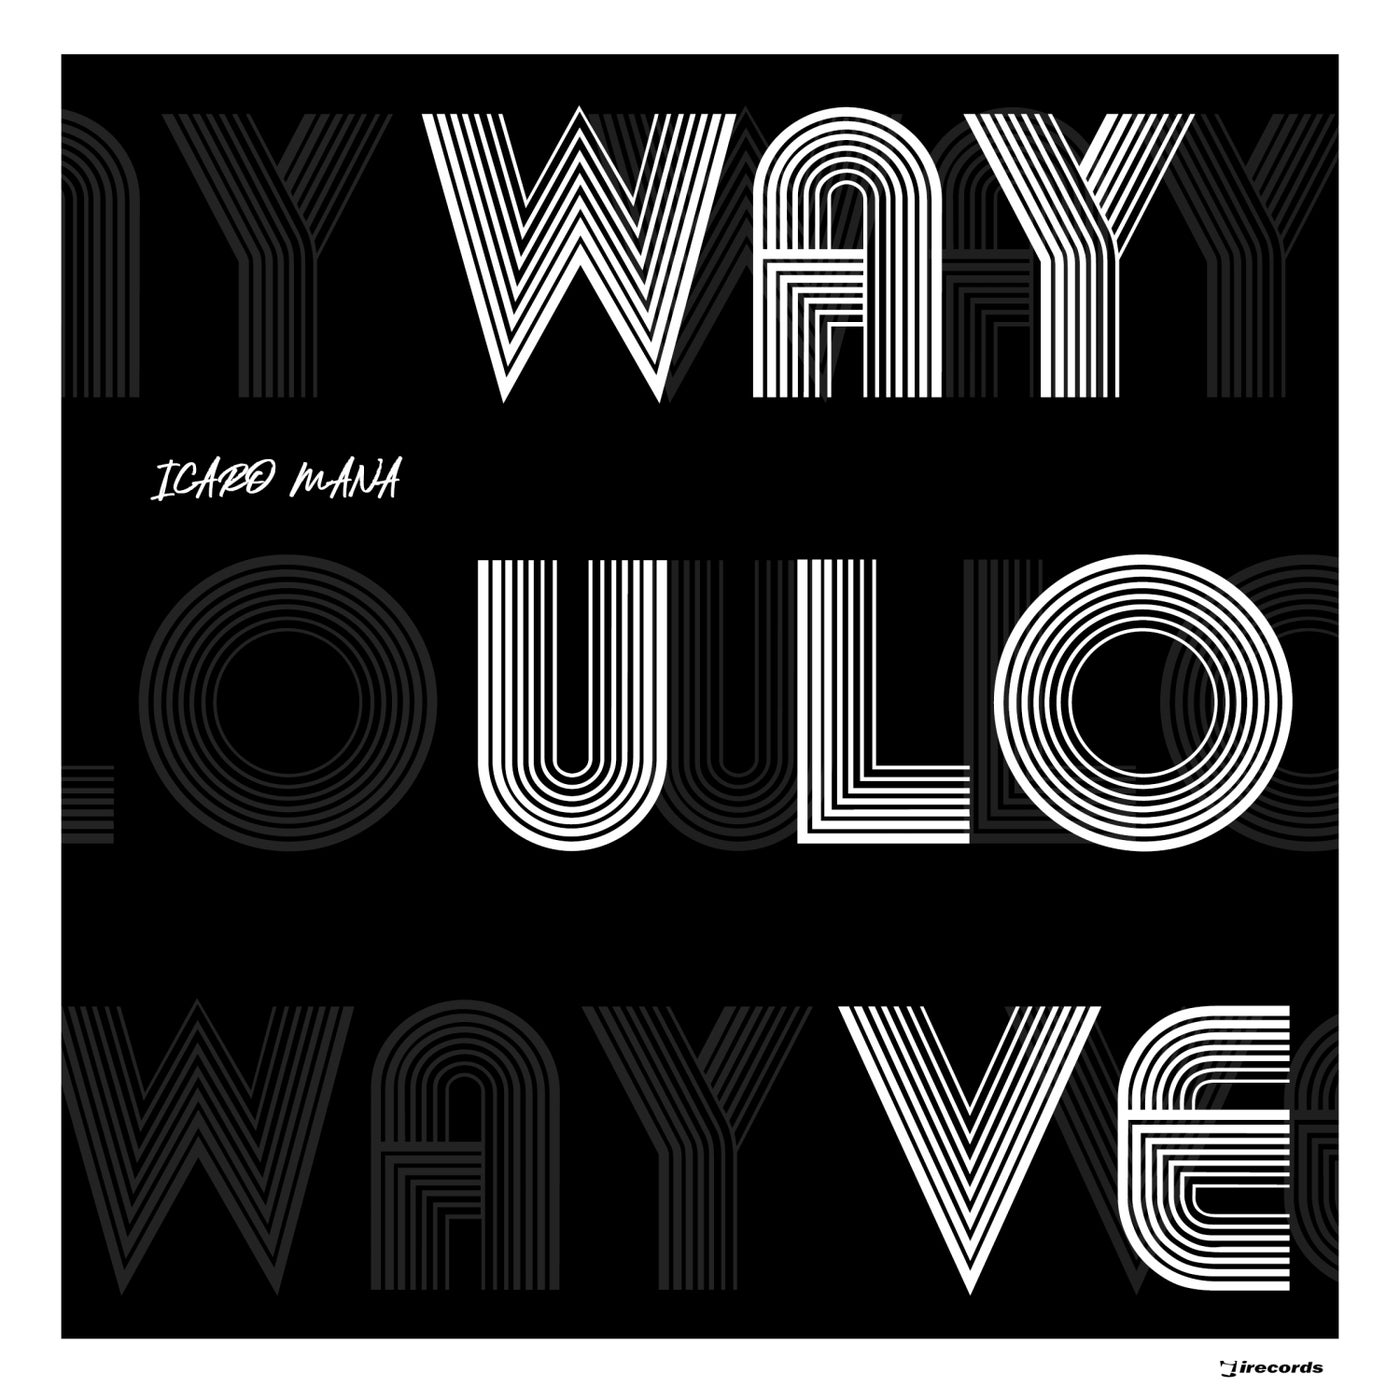 Icaro Mana - Way U Love on I Records